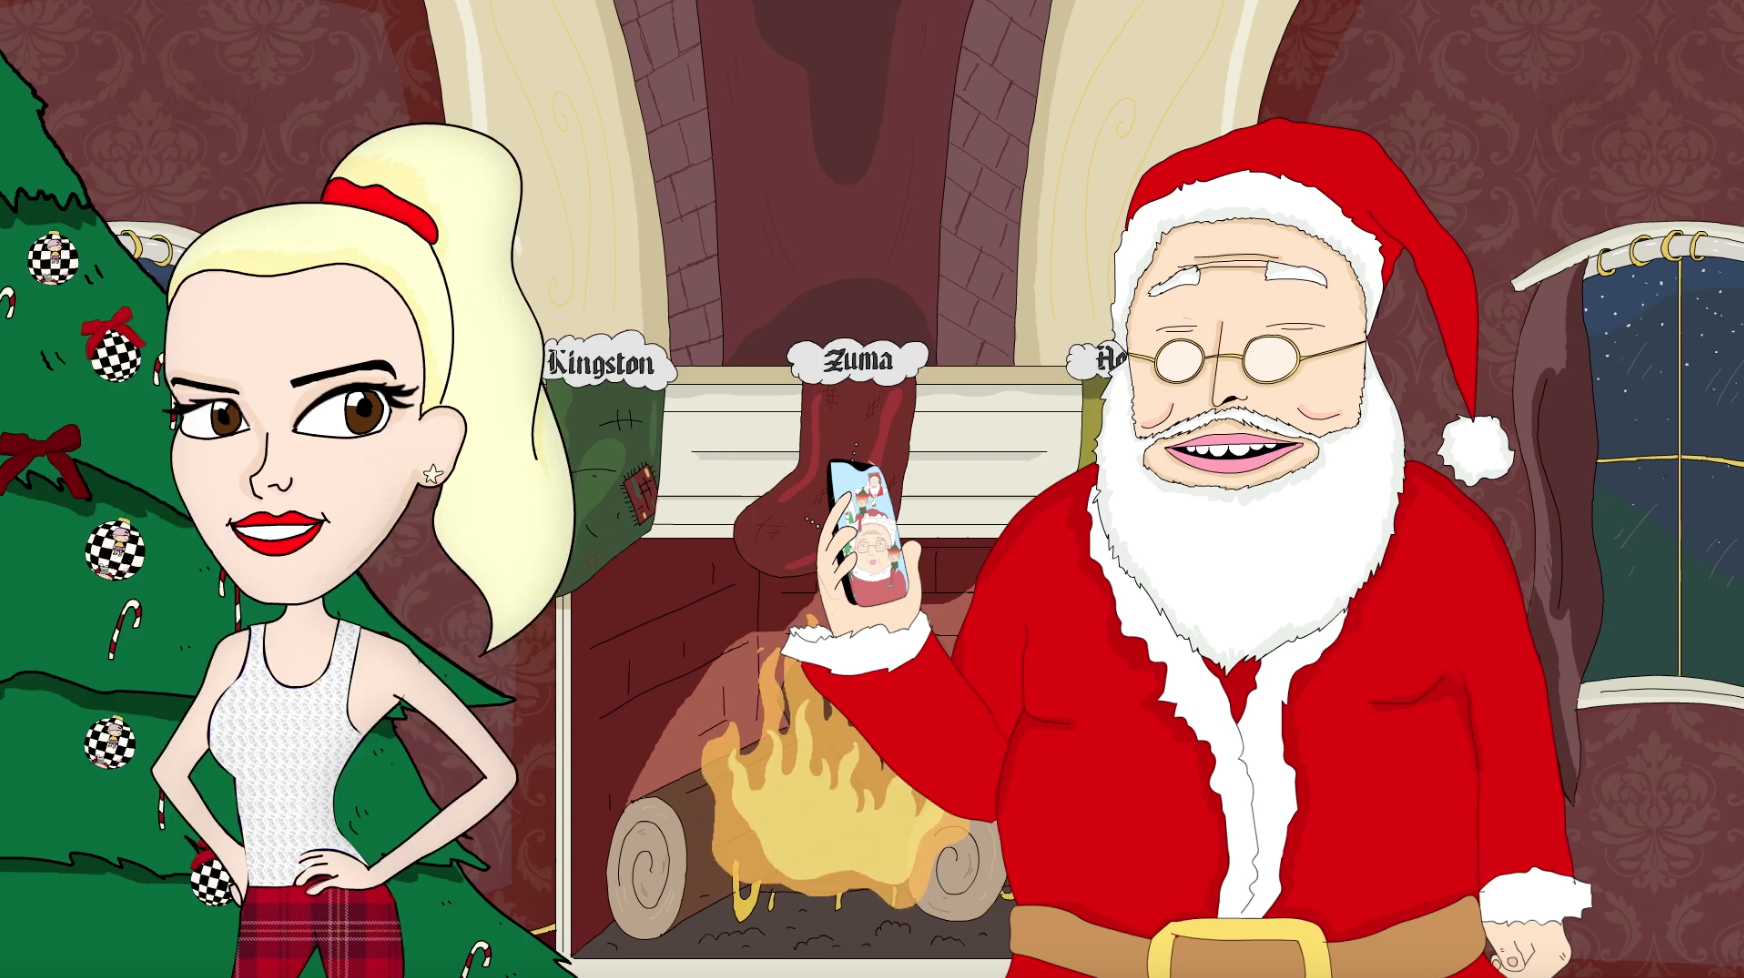 Gwen Stefani and Santa Animation Still Frame